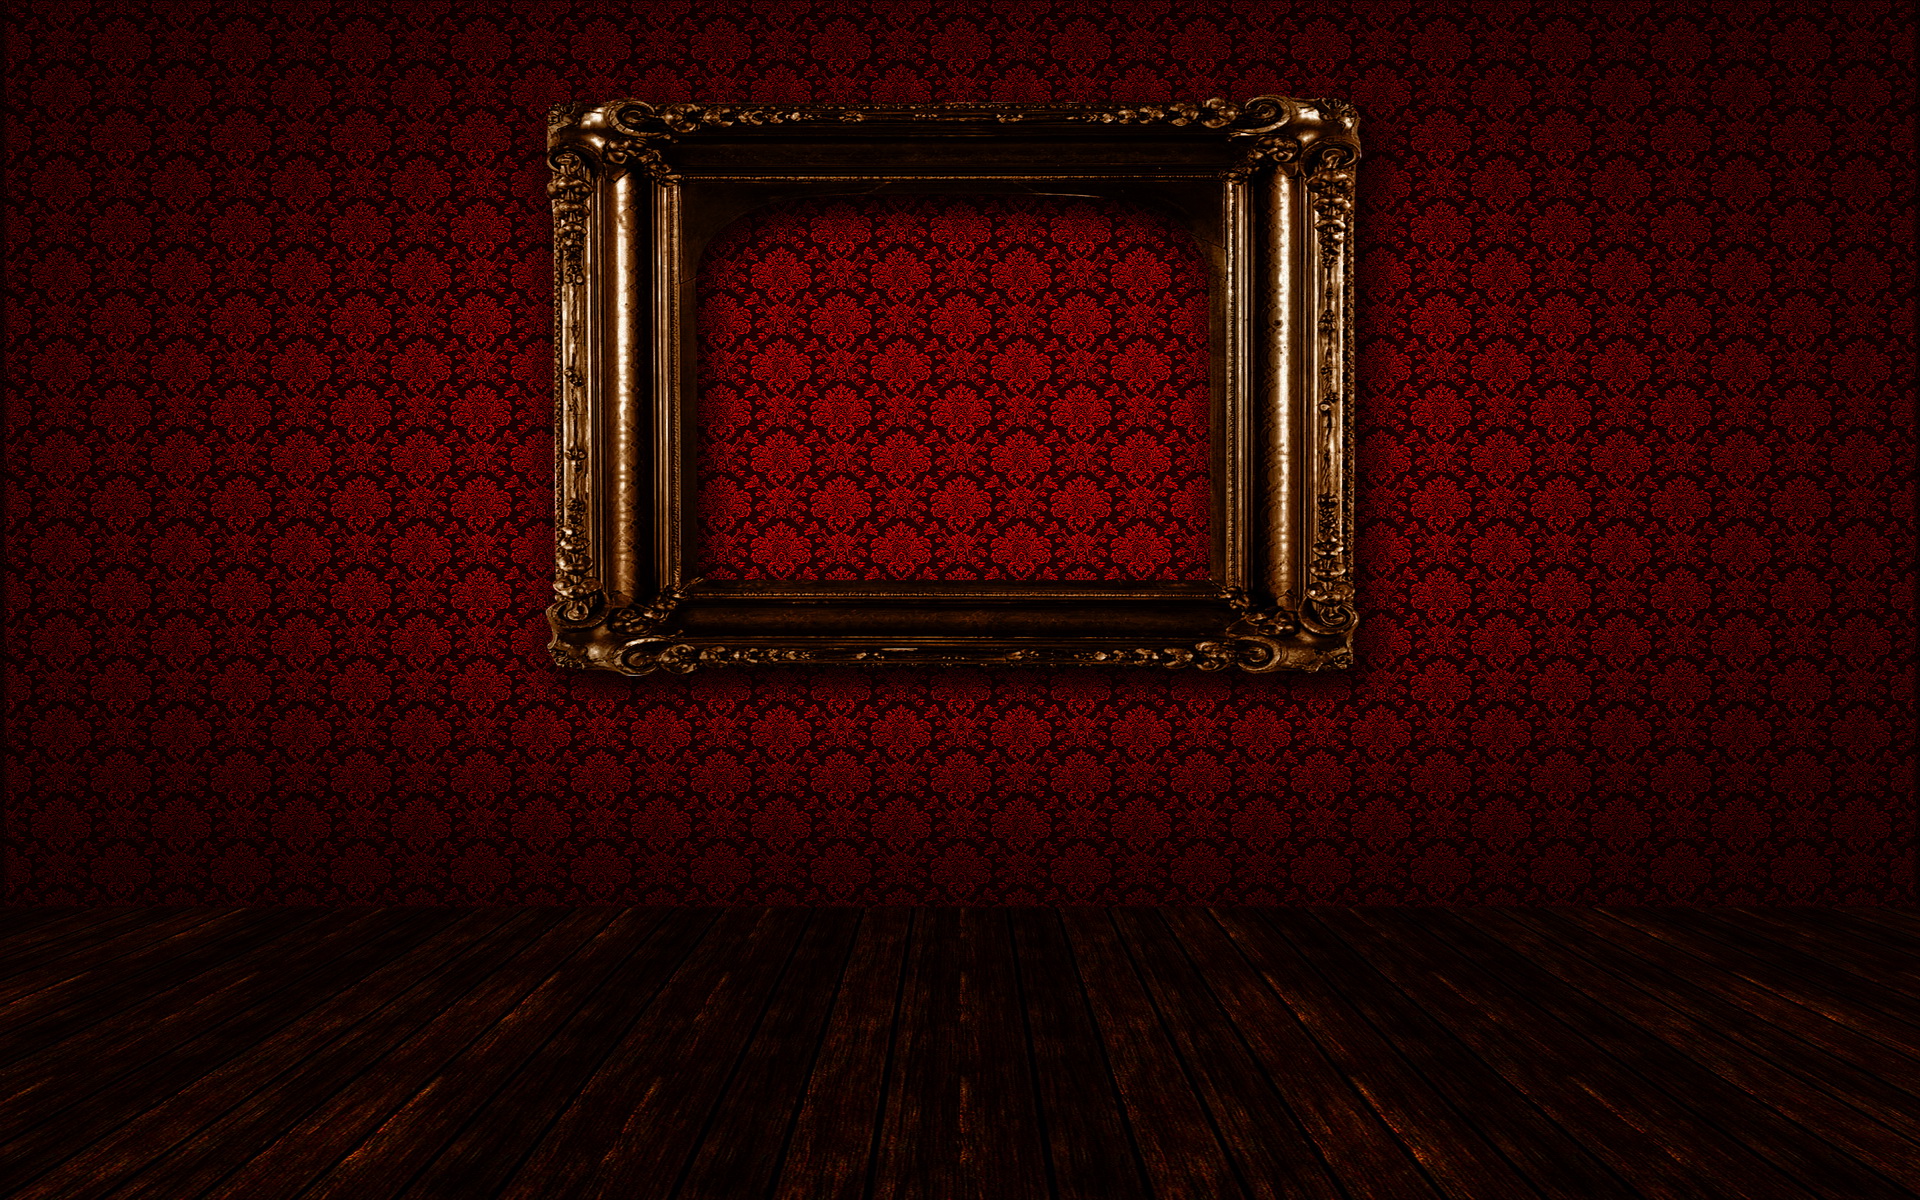 frame wallpaper,red,wood,darkness,floor,rectangle